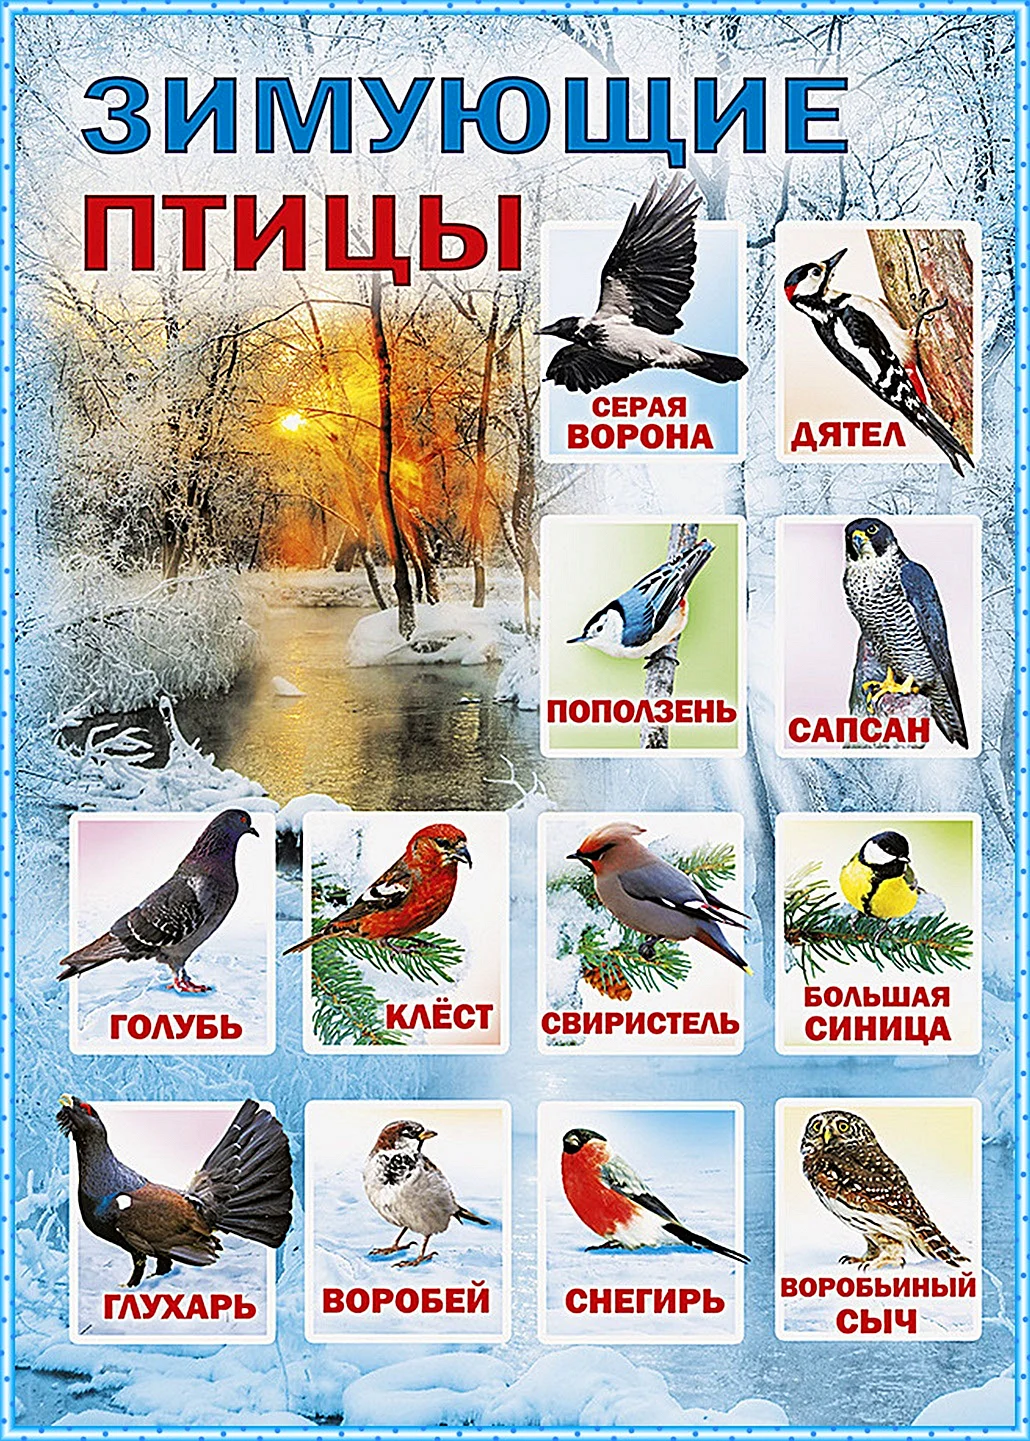 Зимующие птицы Красноярского края